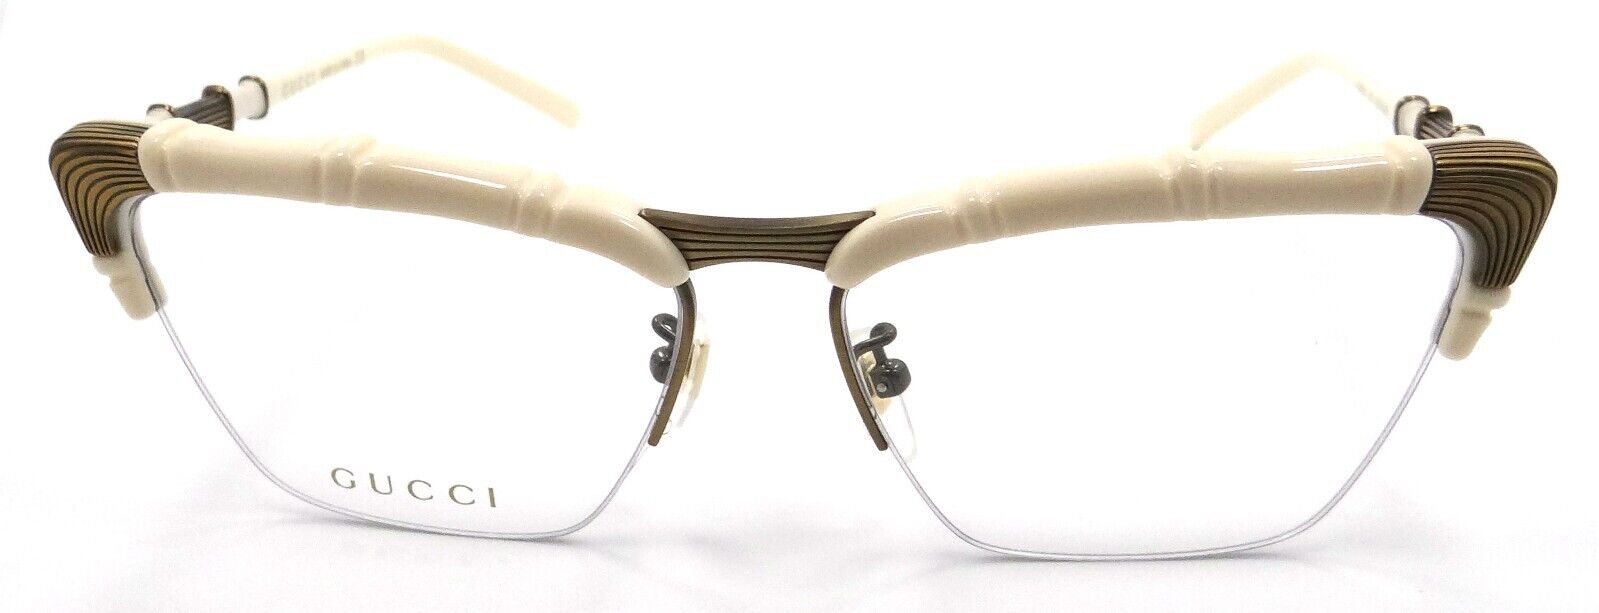 Gucci Eyeglasses Frames GG0660O 002 58-15-140 White Made in Japan-889652276625-classypw.com-1